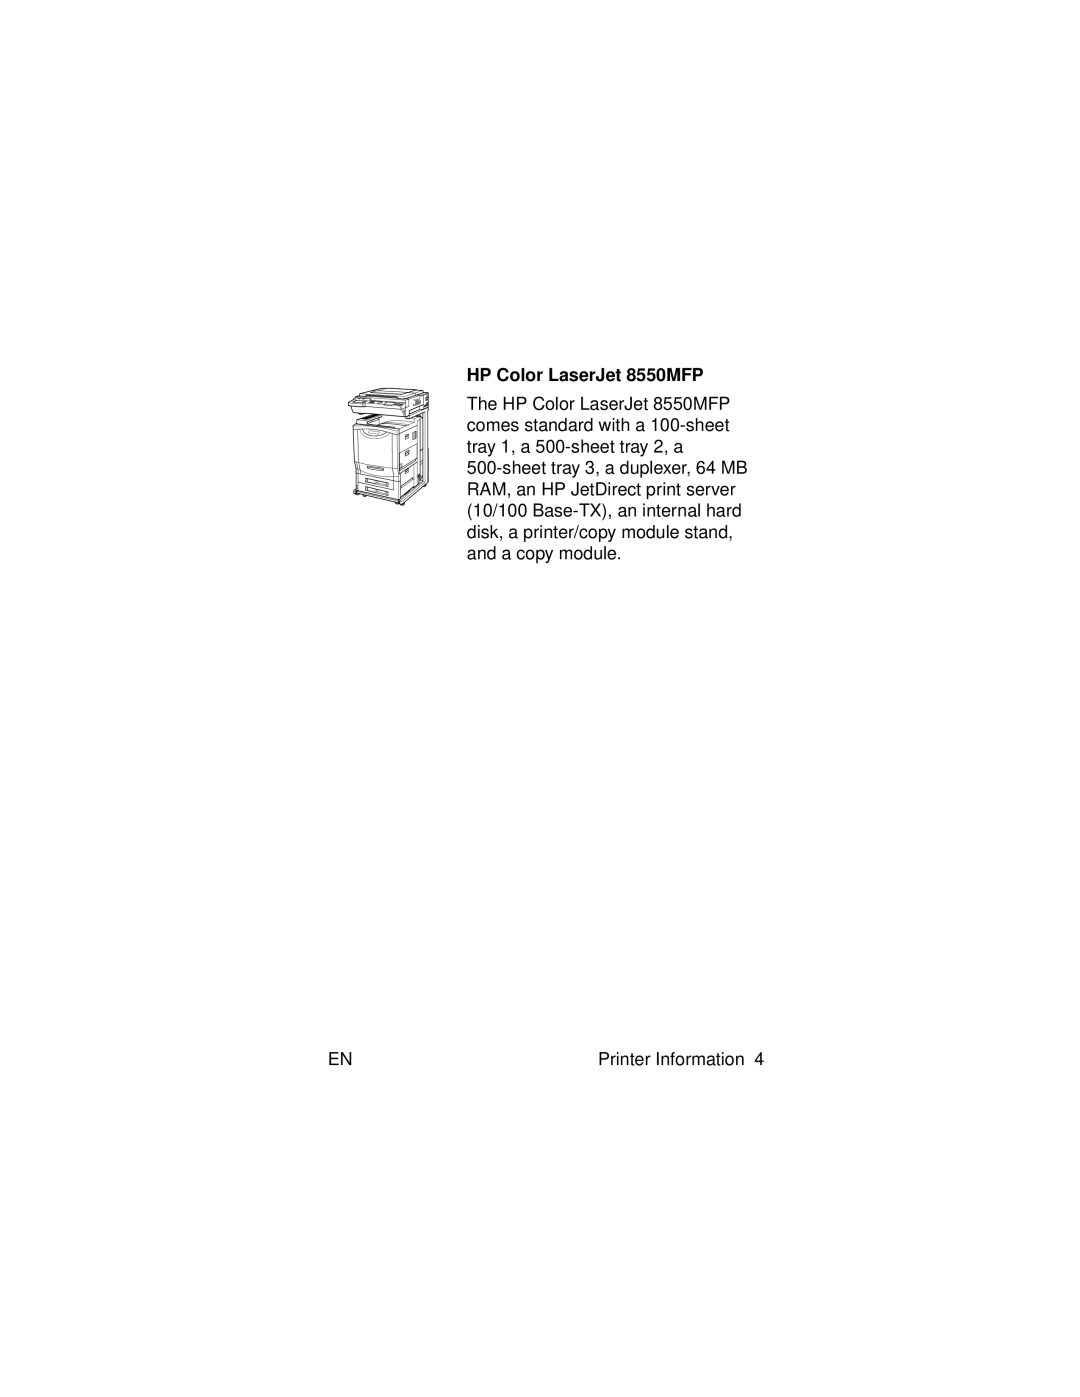 HP 8000 s manual HP Color LaserJet 8550MFP, Printer Information 